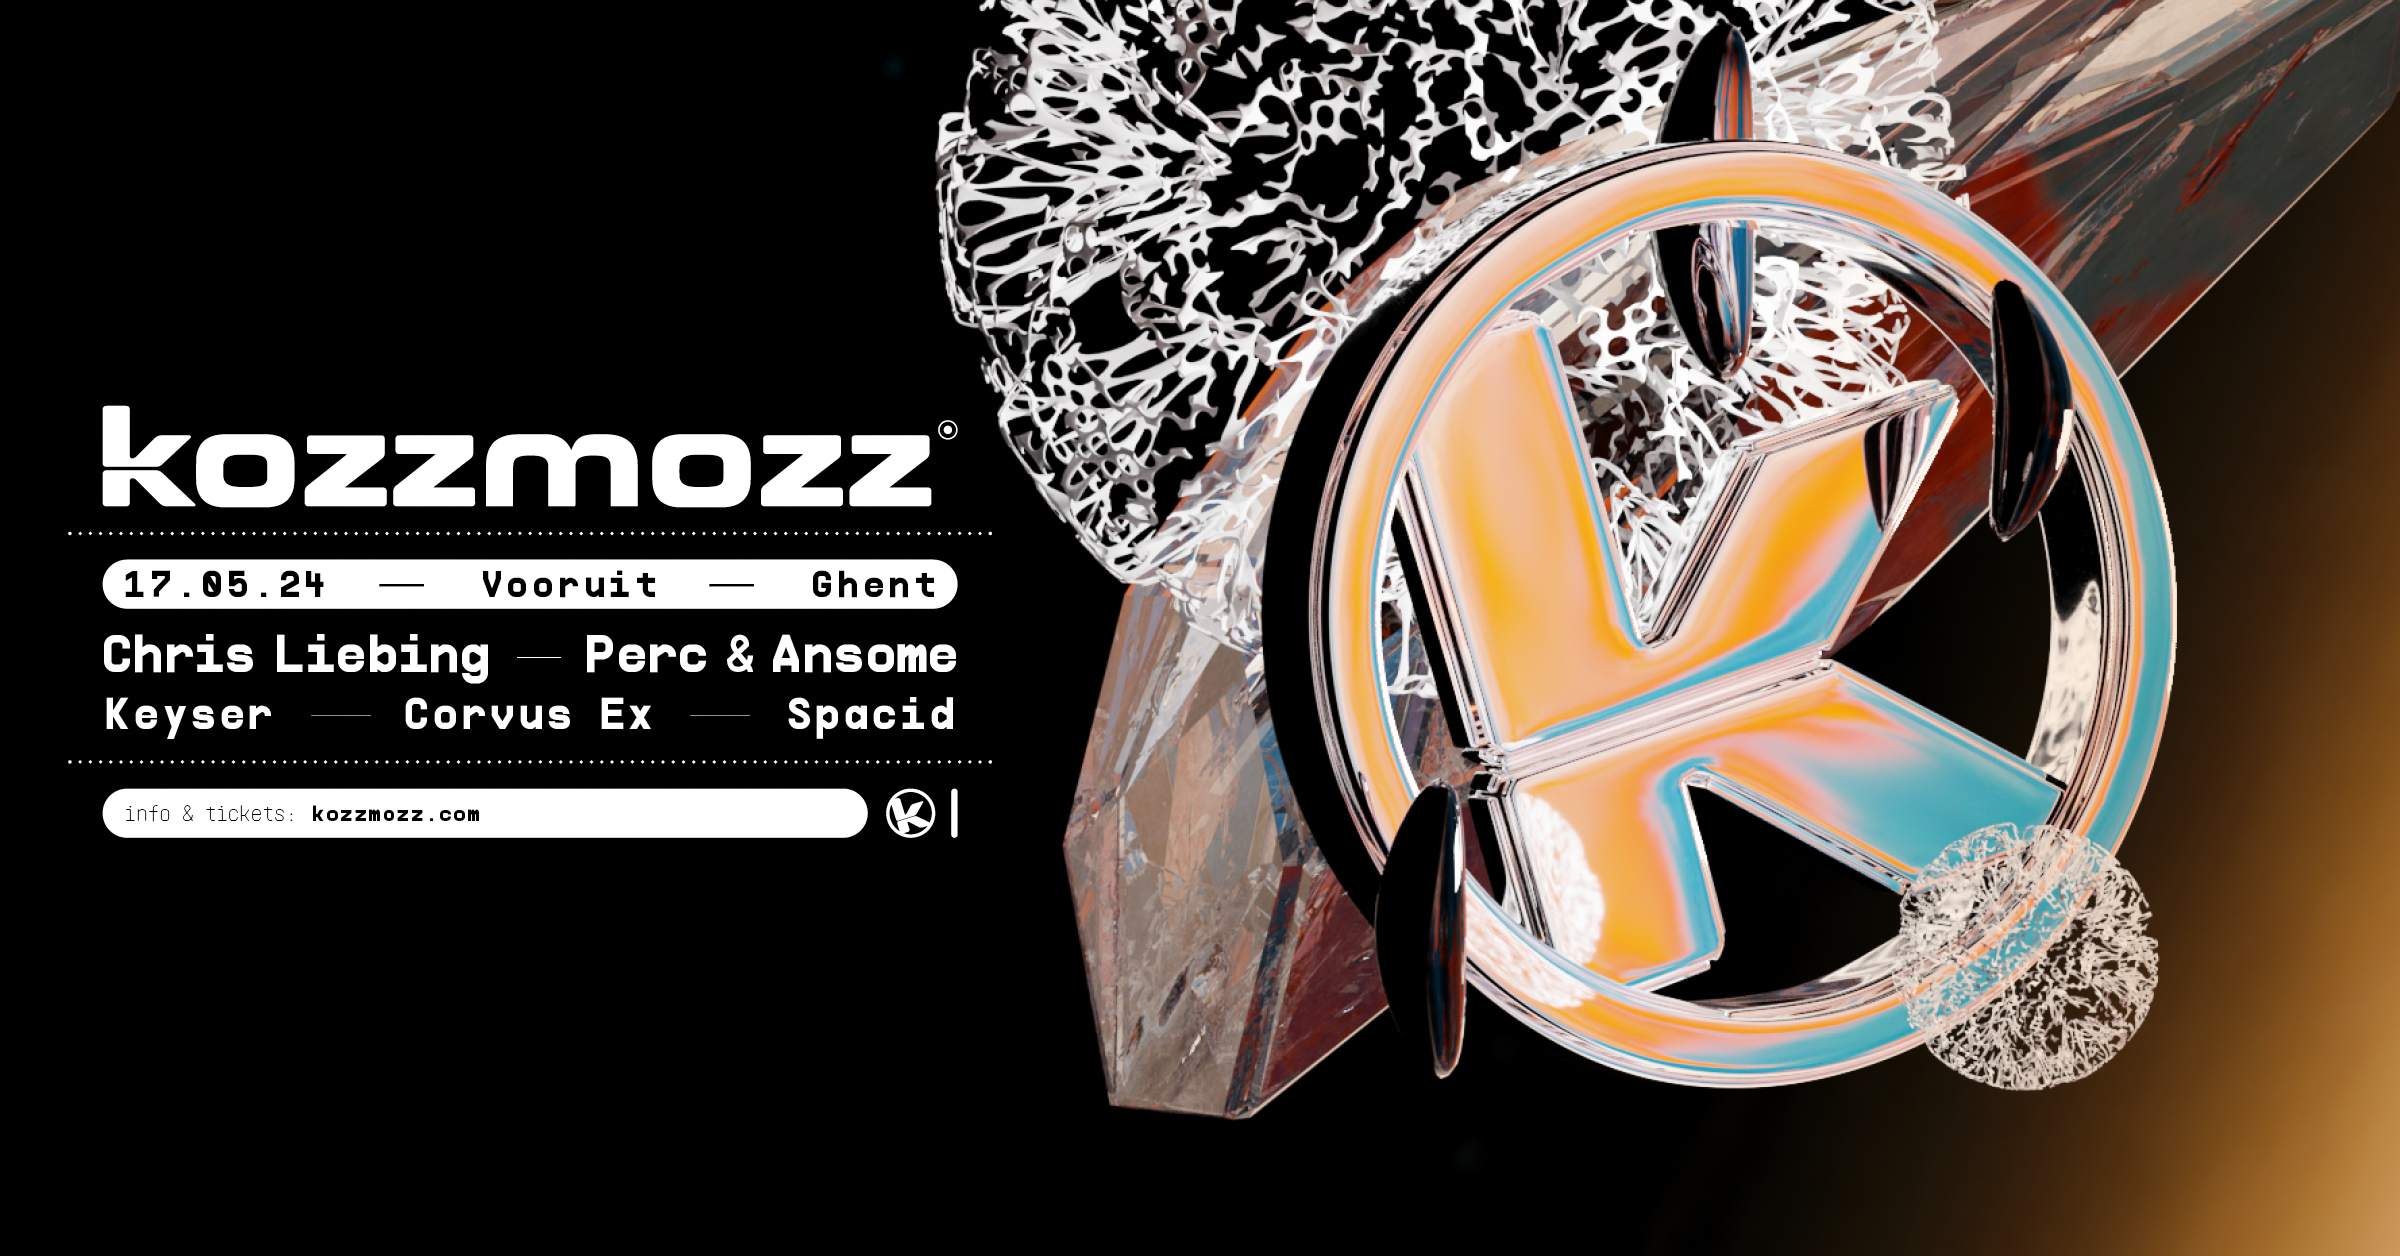 KozzMozz with Chris Liebing, Perc & Ansome, Keyser, Corvus Ex & Spacid - フライヤー表